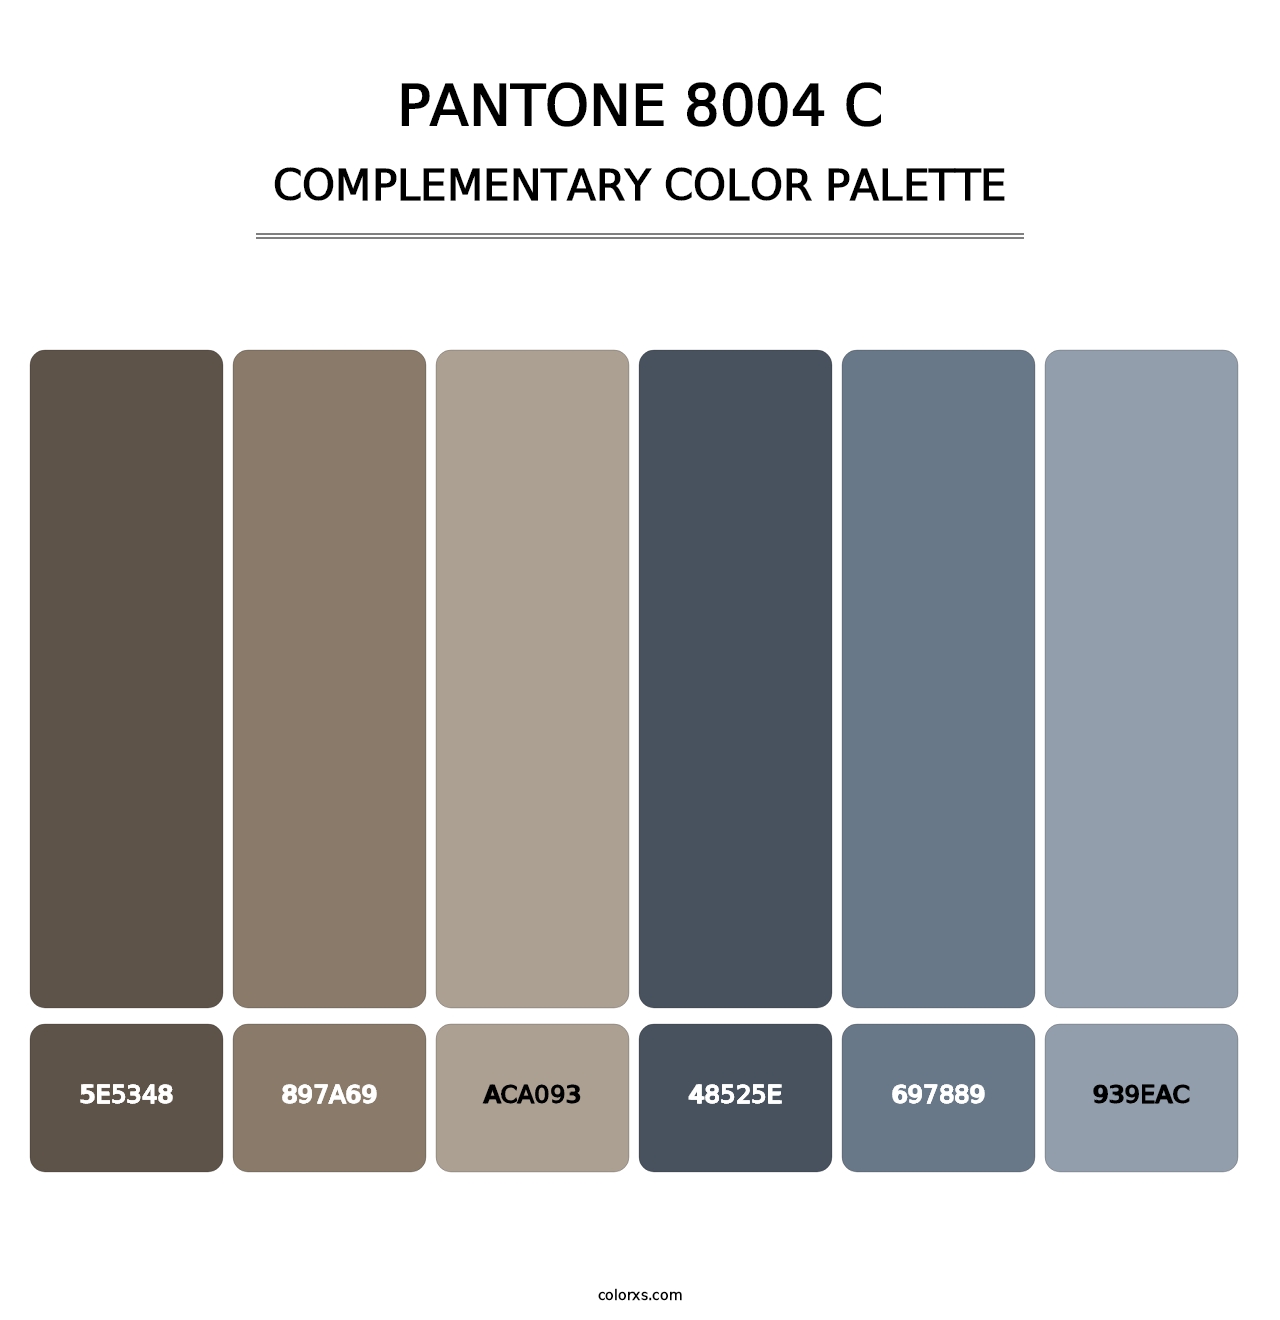 PANTONE 8004 C - Complementary Color Palette